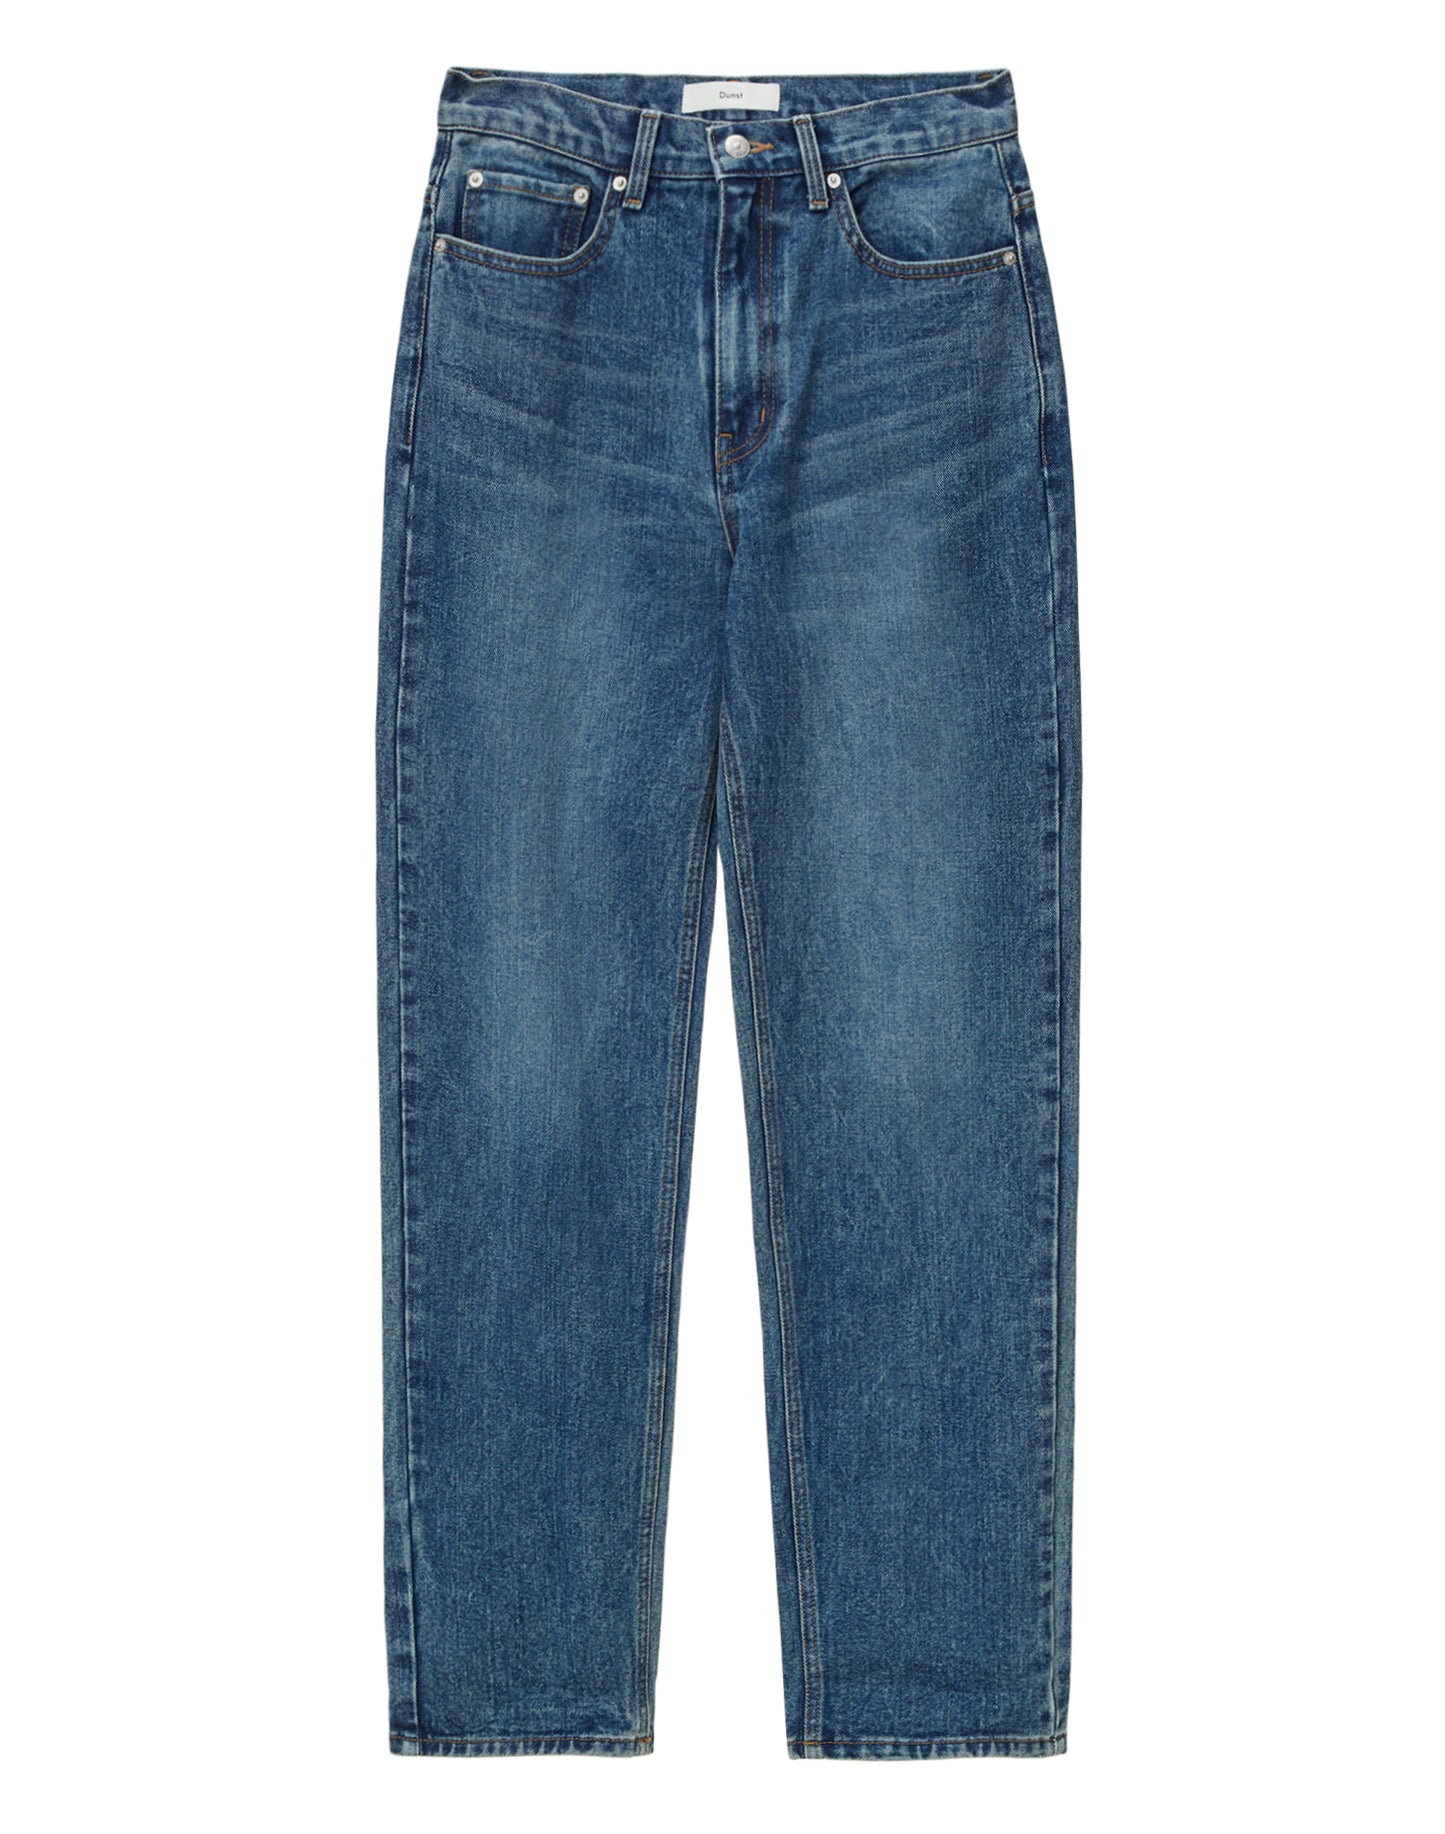 90's Wide Leg Jeans (Brushed Blue)